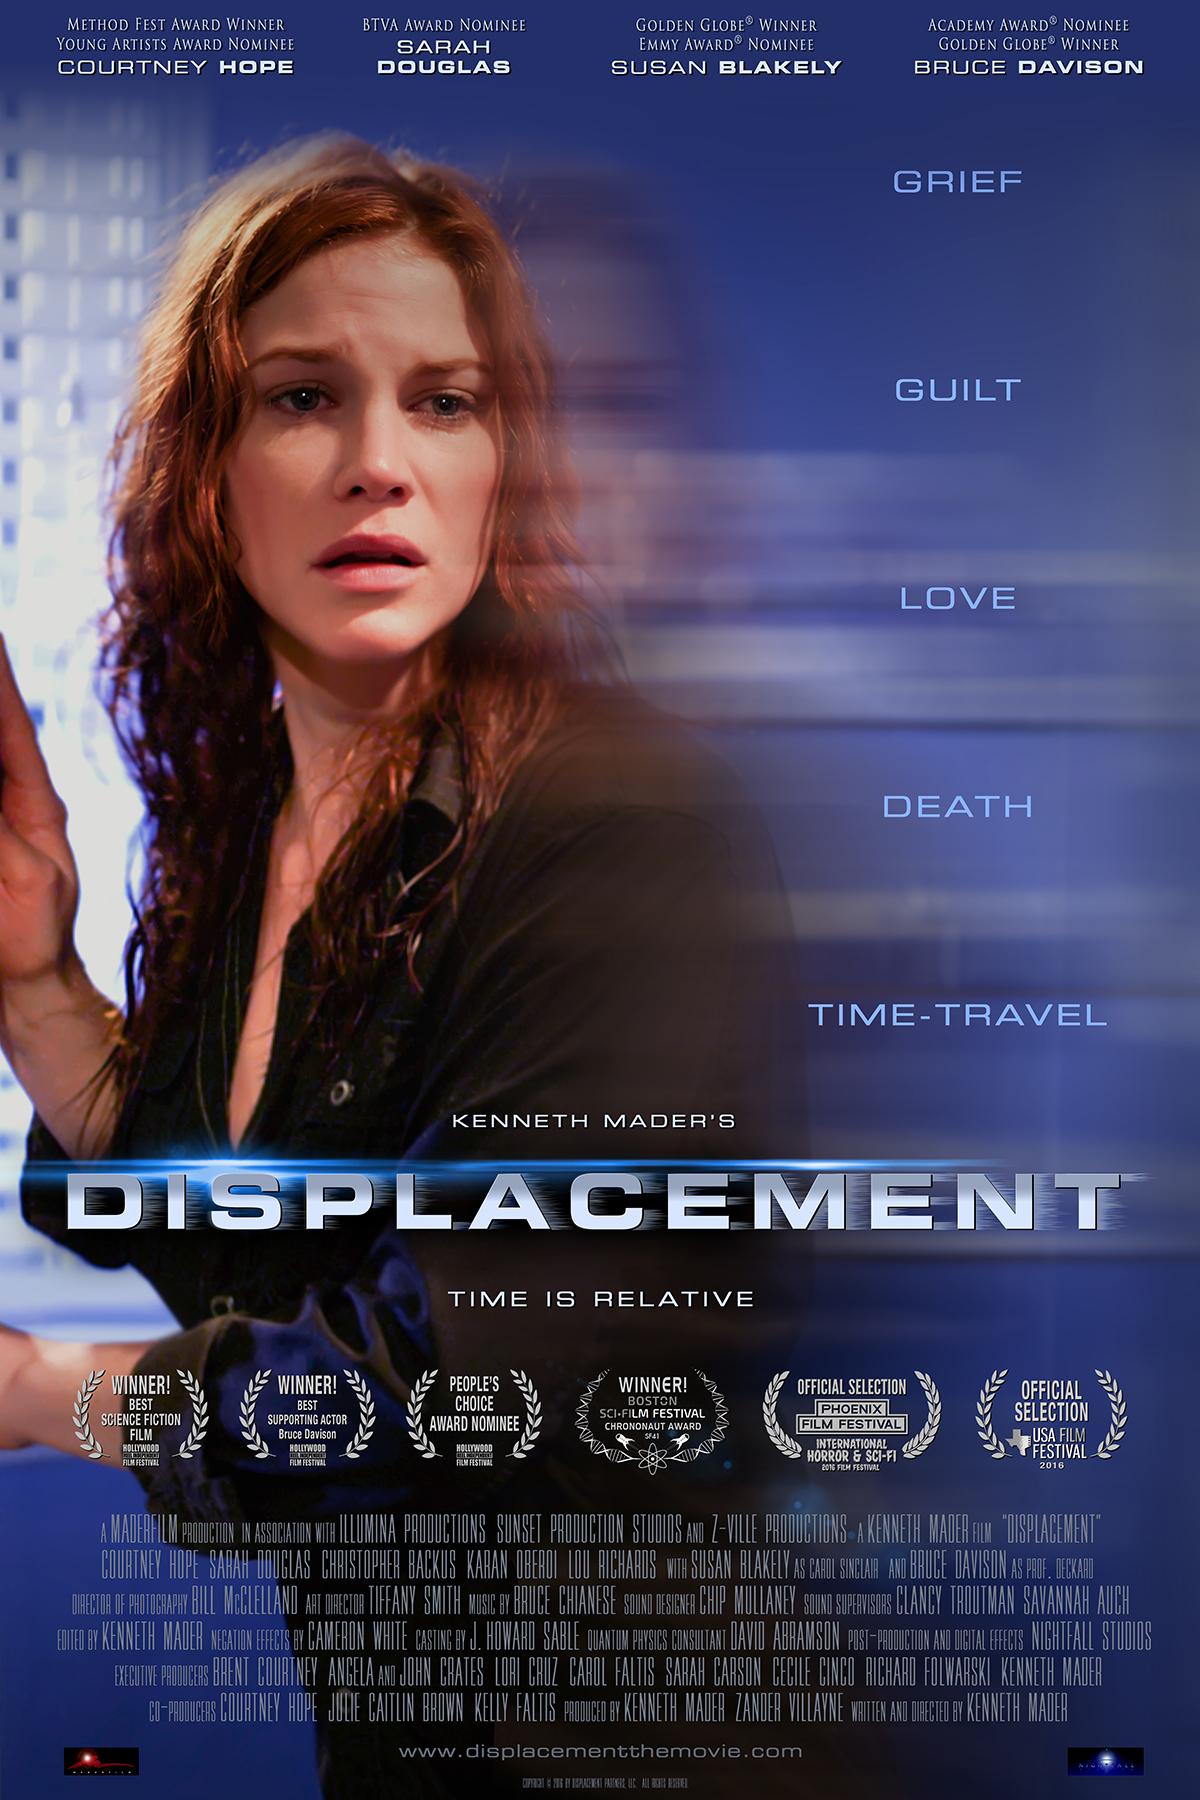 Displacement